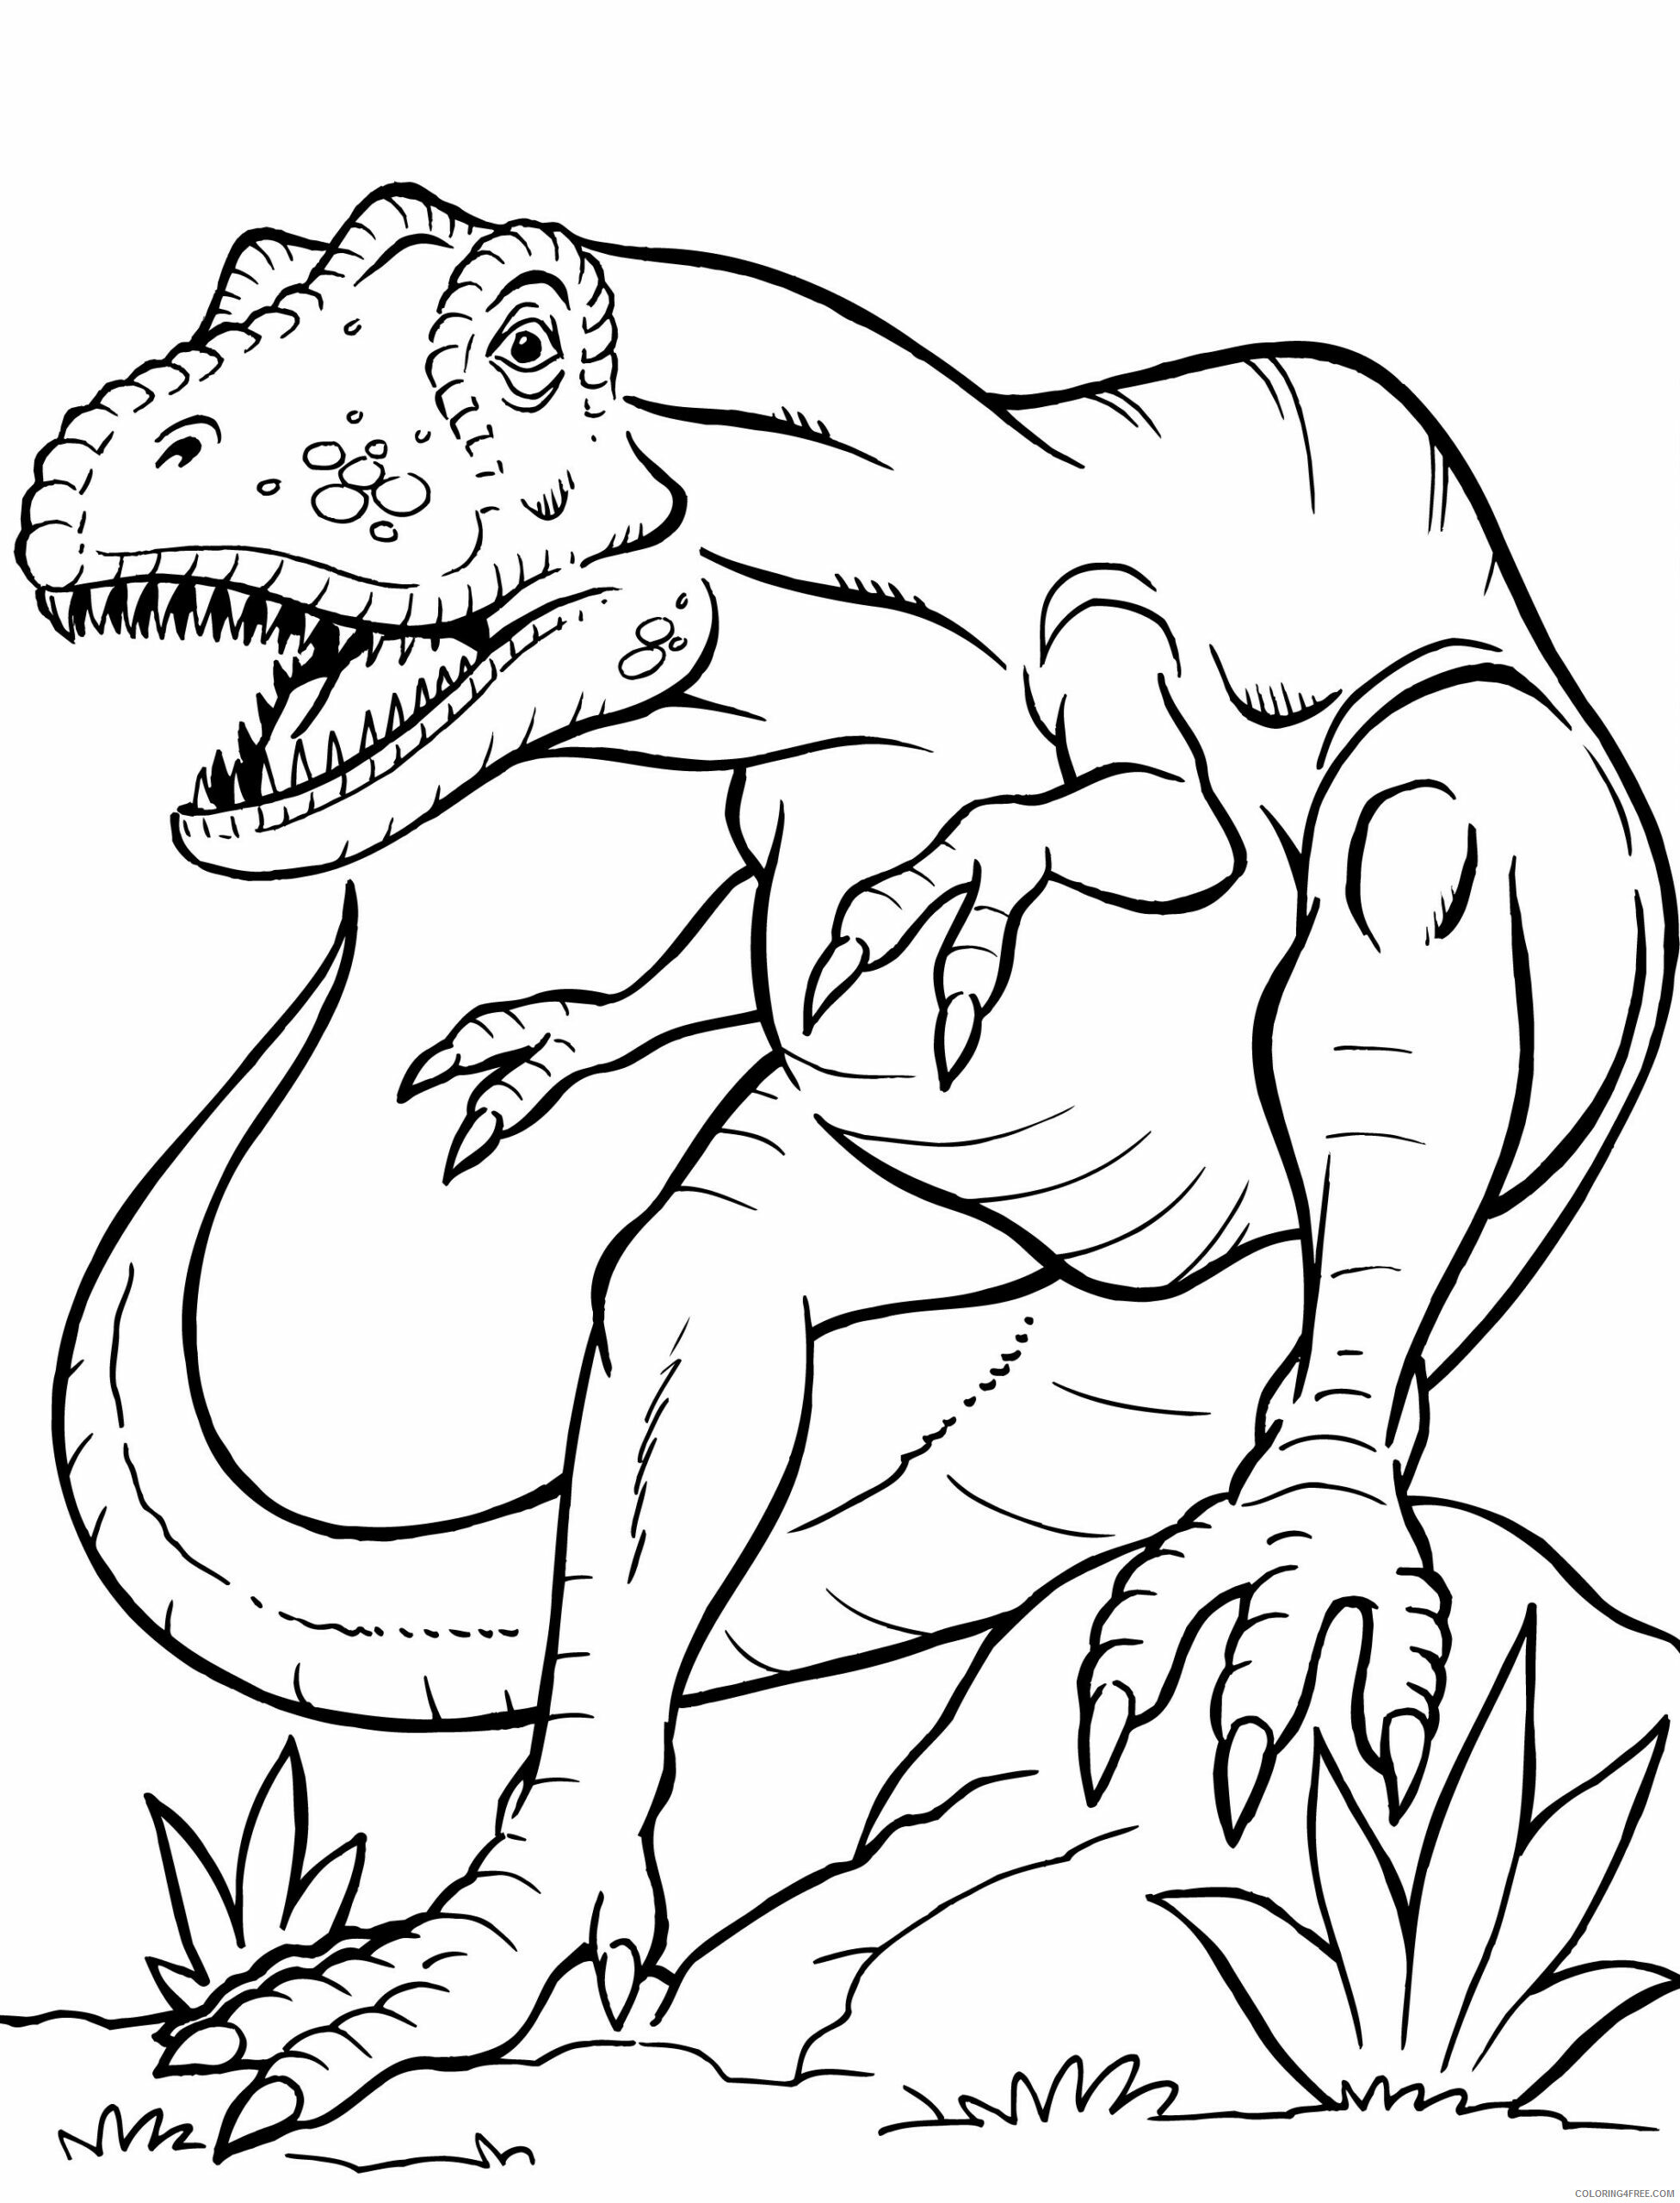 Tyrannosaurus Rex Coloring Pages Animal Printable Sheets T rex 2 2021 4918 Coloring4free